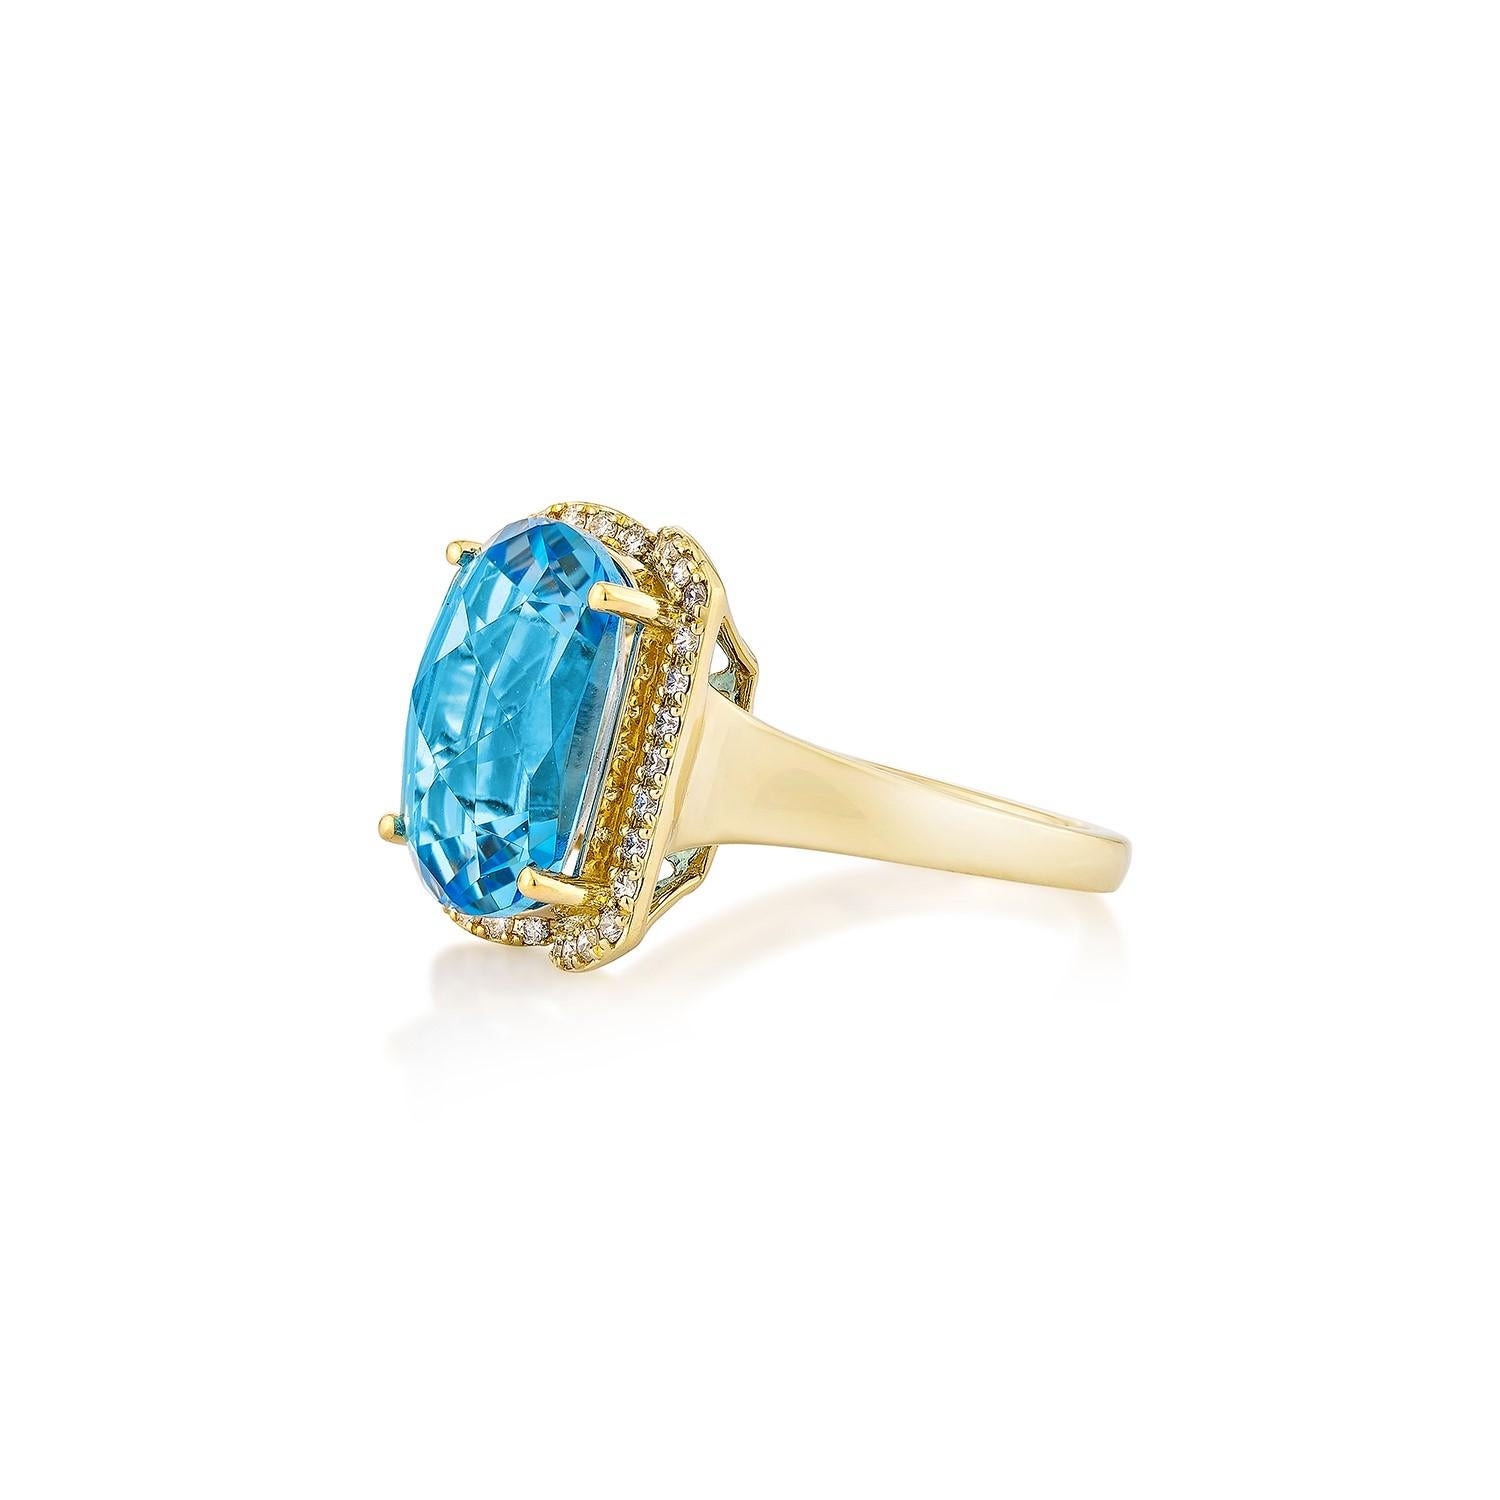 Oval Cut 7.83 Carat Swiss Blue Topaz Fancy Ring in 18Karat Yellow Gold with Diamond. For Sale